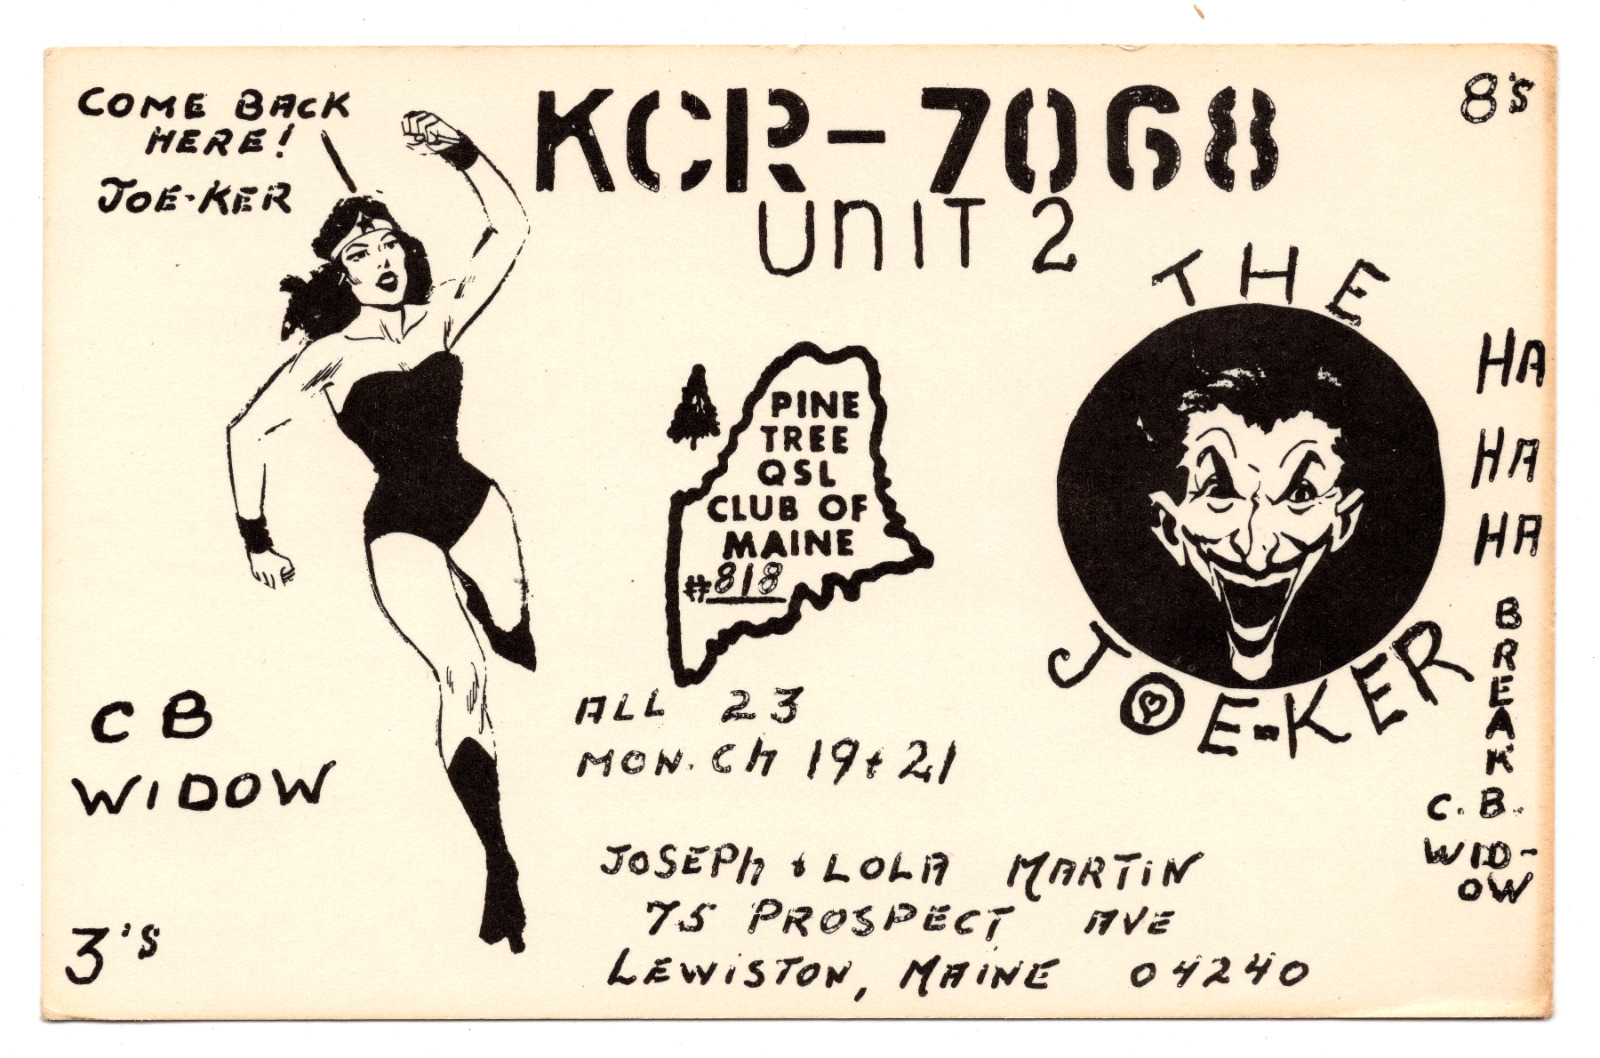 Vintage QSL Radio Card - CB Widow and The Joe-ker Lewiston, Maine